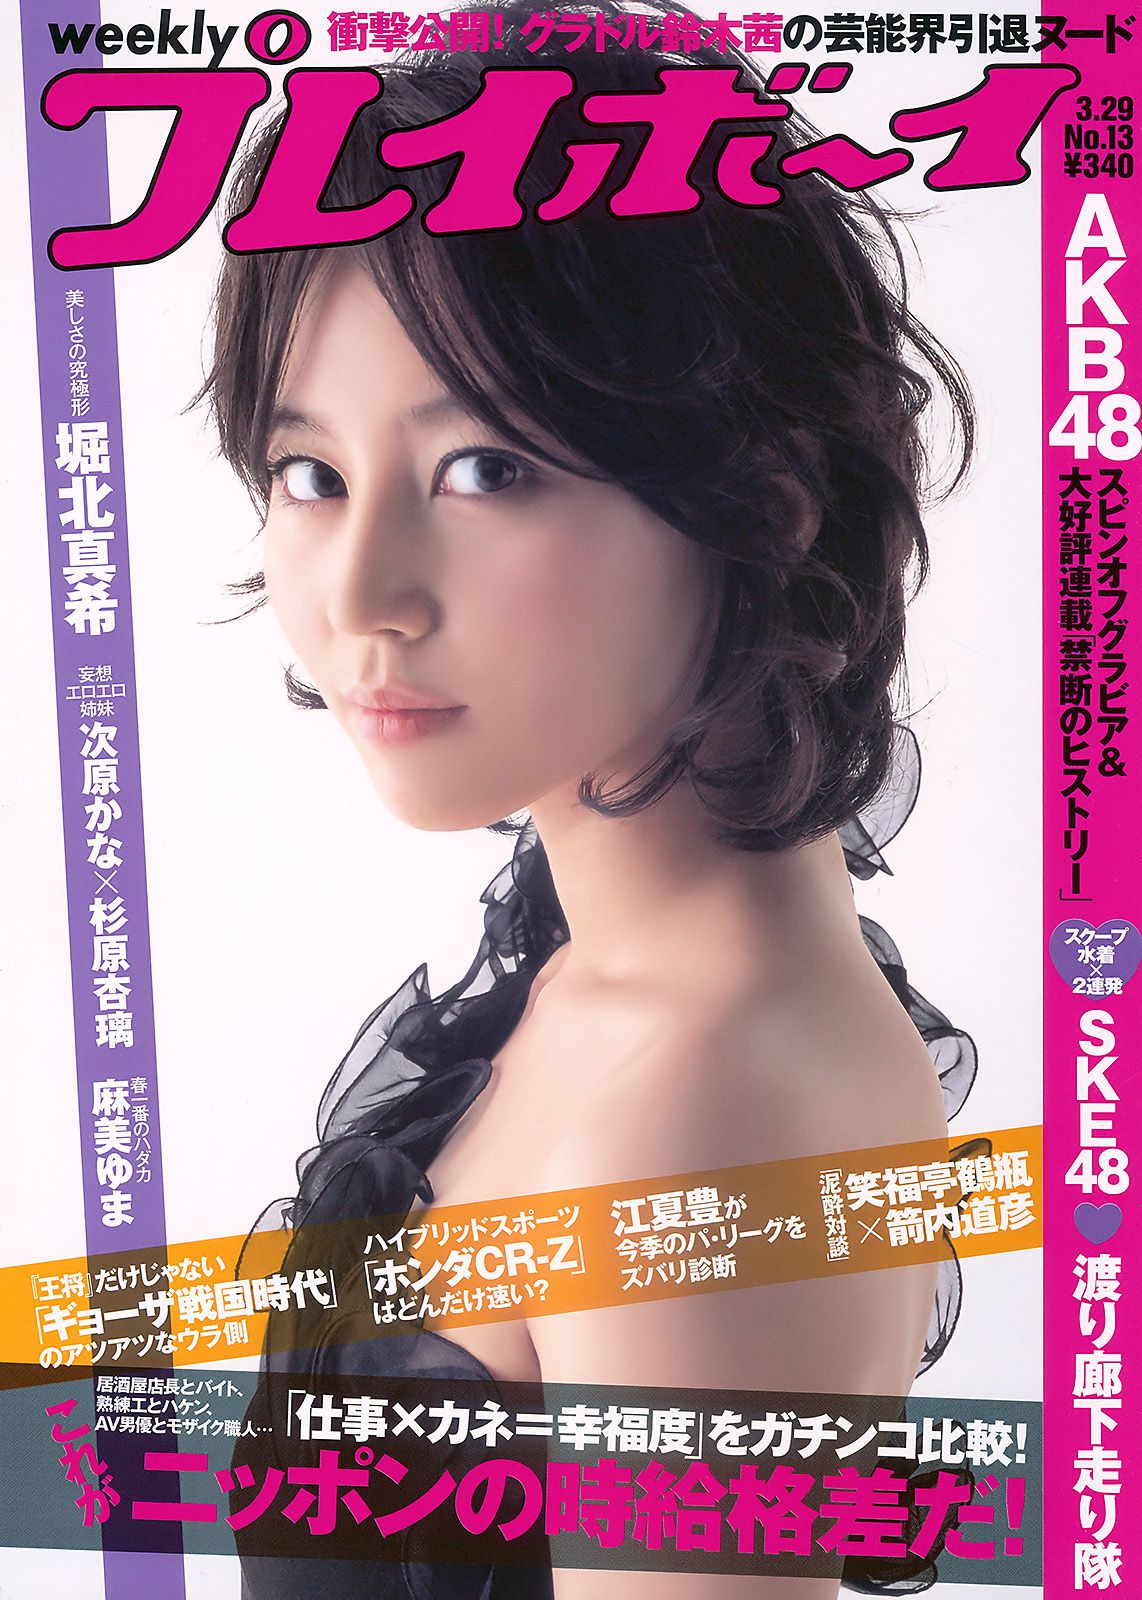 [Weekly Playboy] 2010年No.13 写真杂志